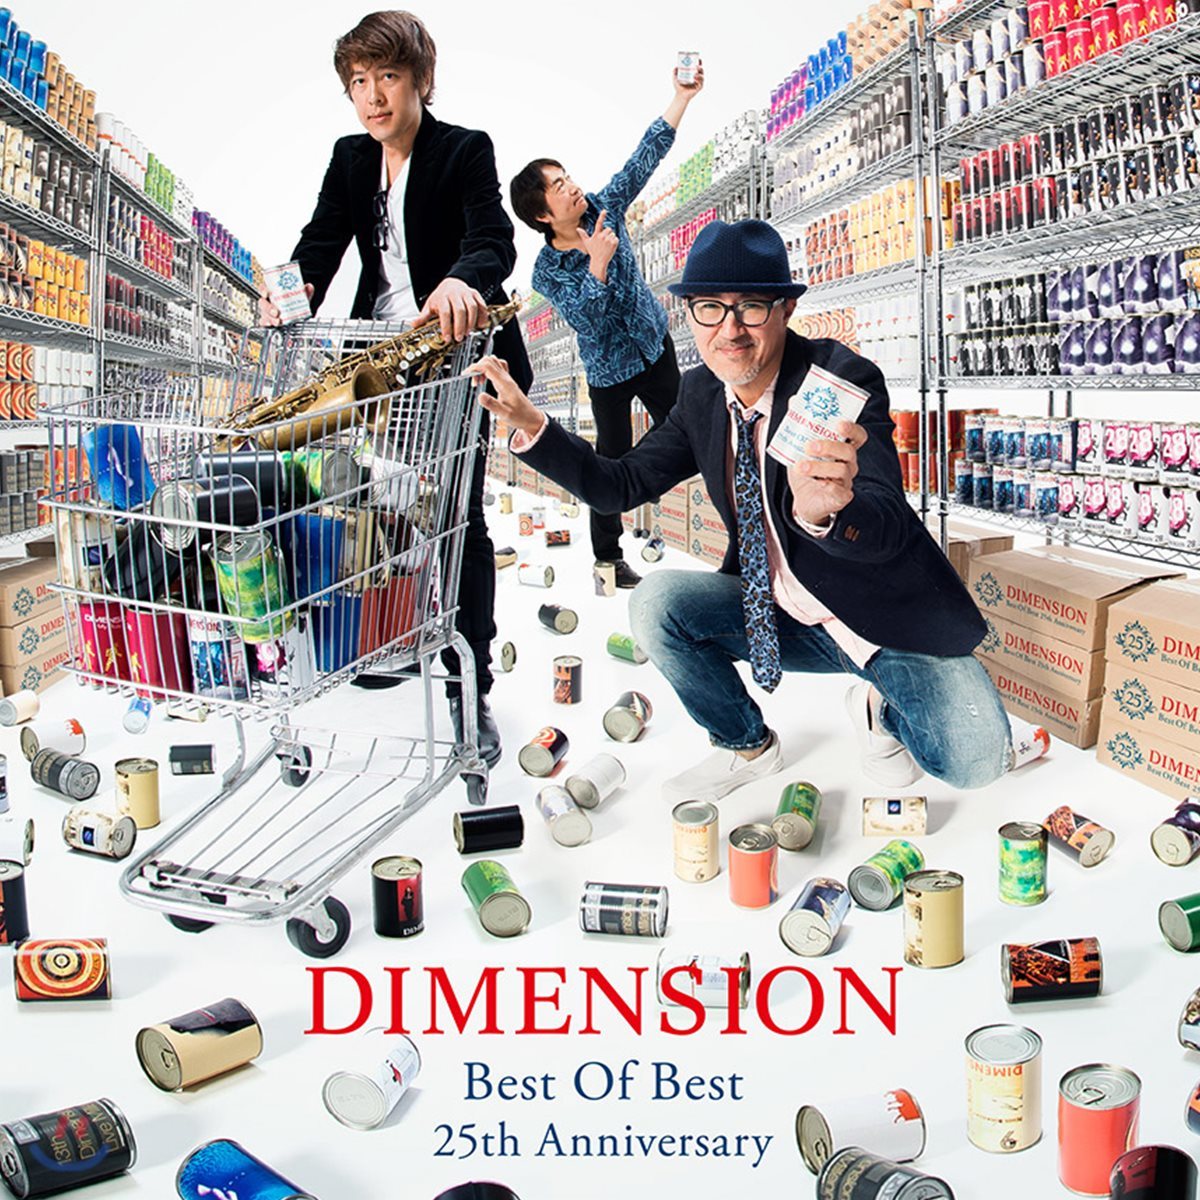 Dimension (디멘션) - Best of Best: 25th Anniversary (결성 25주년 기념 첫 베스트 앨범)